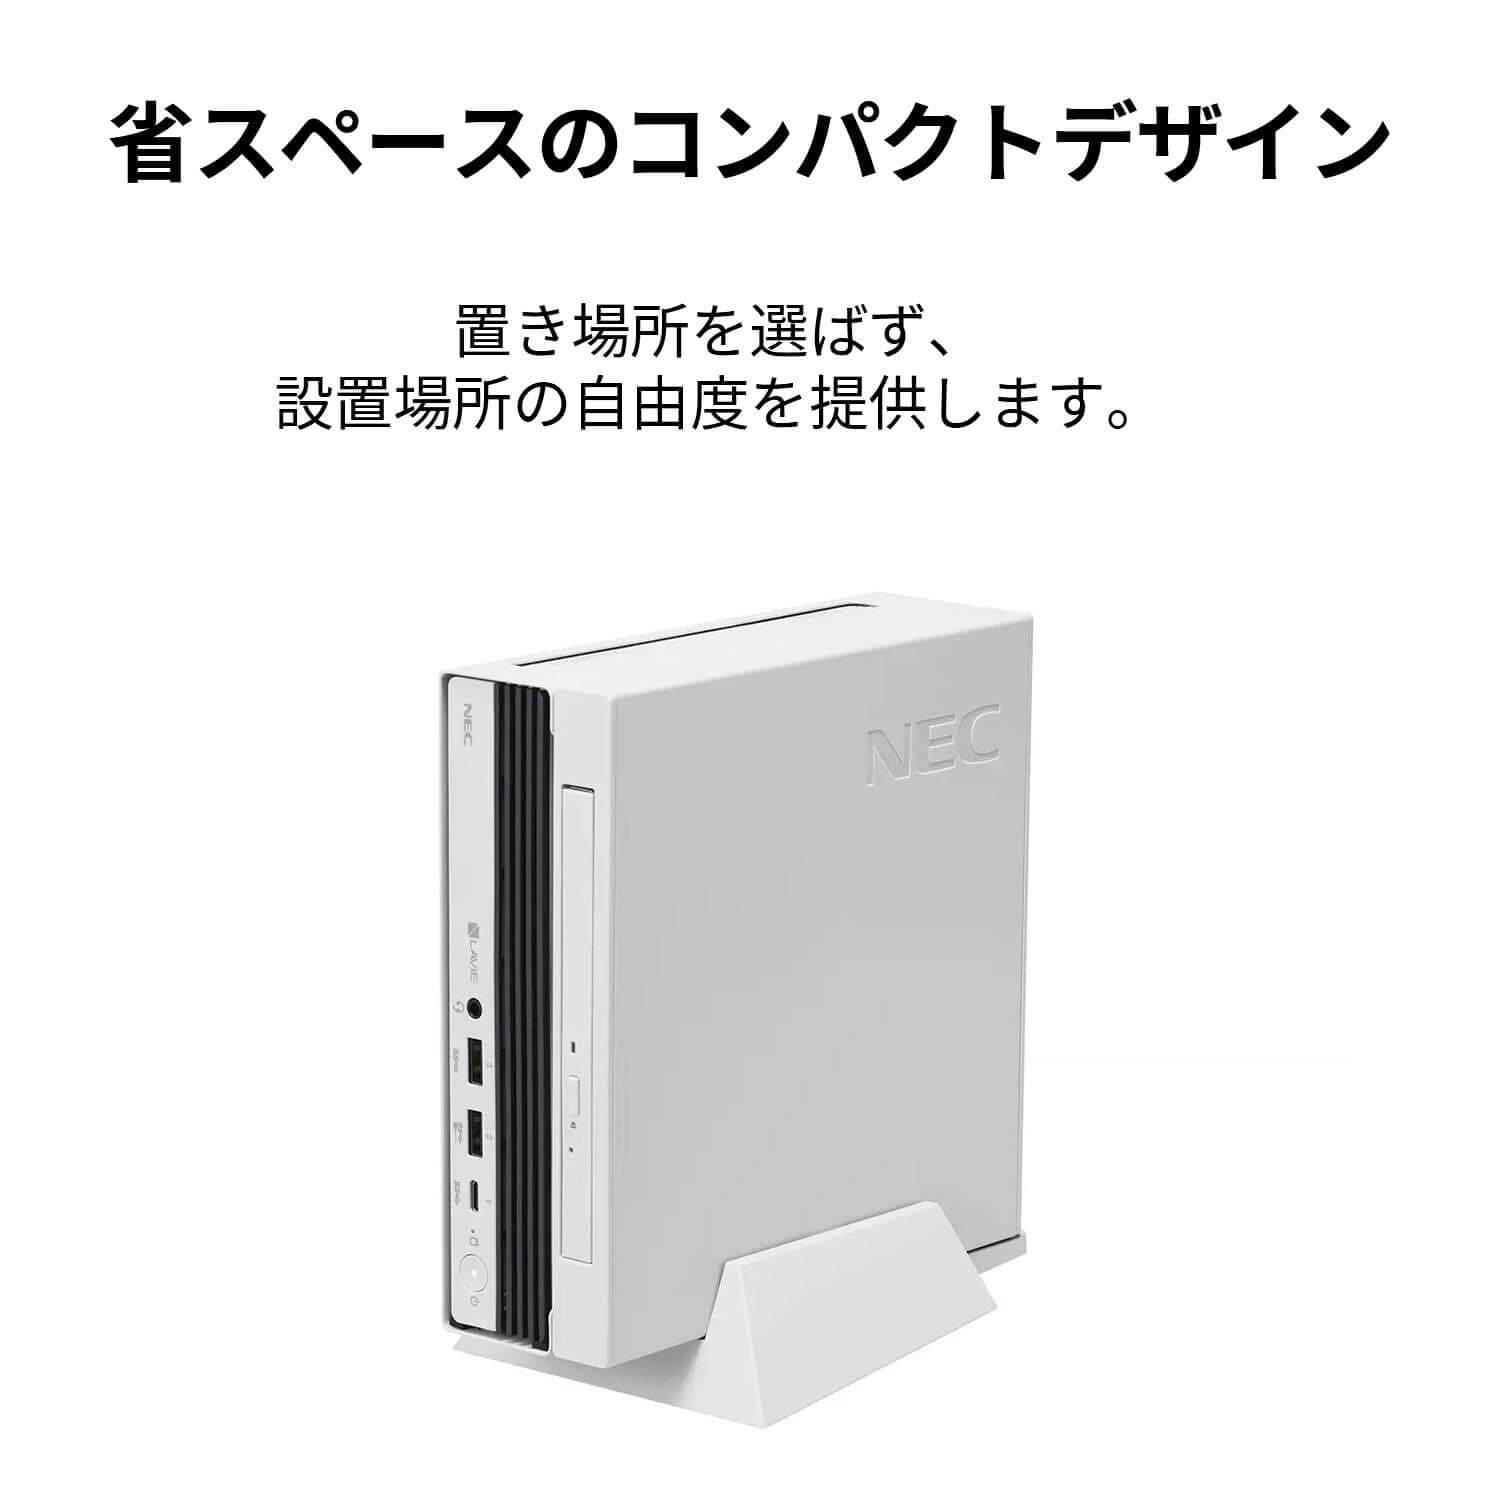 1 NEC ミニPC 小型 デスクトップパソコン 新品 office付き LAVIE 